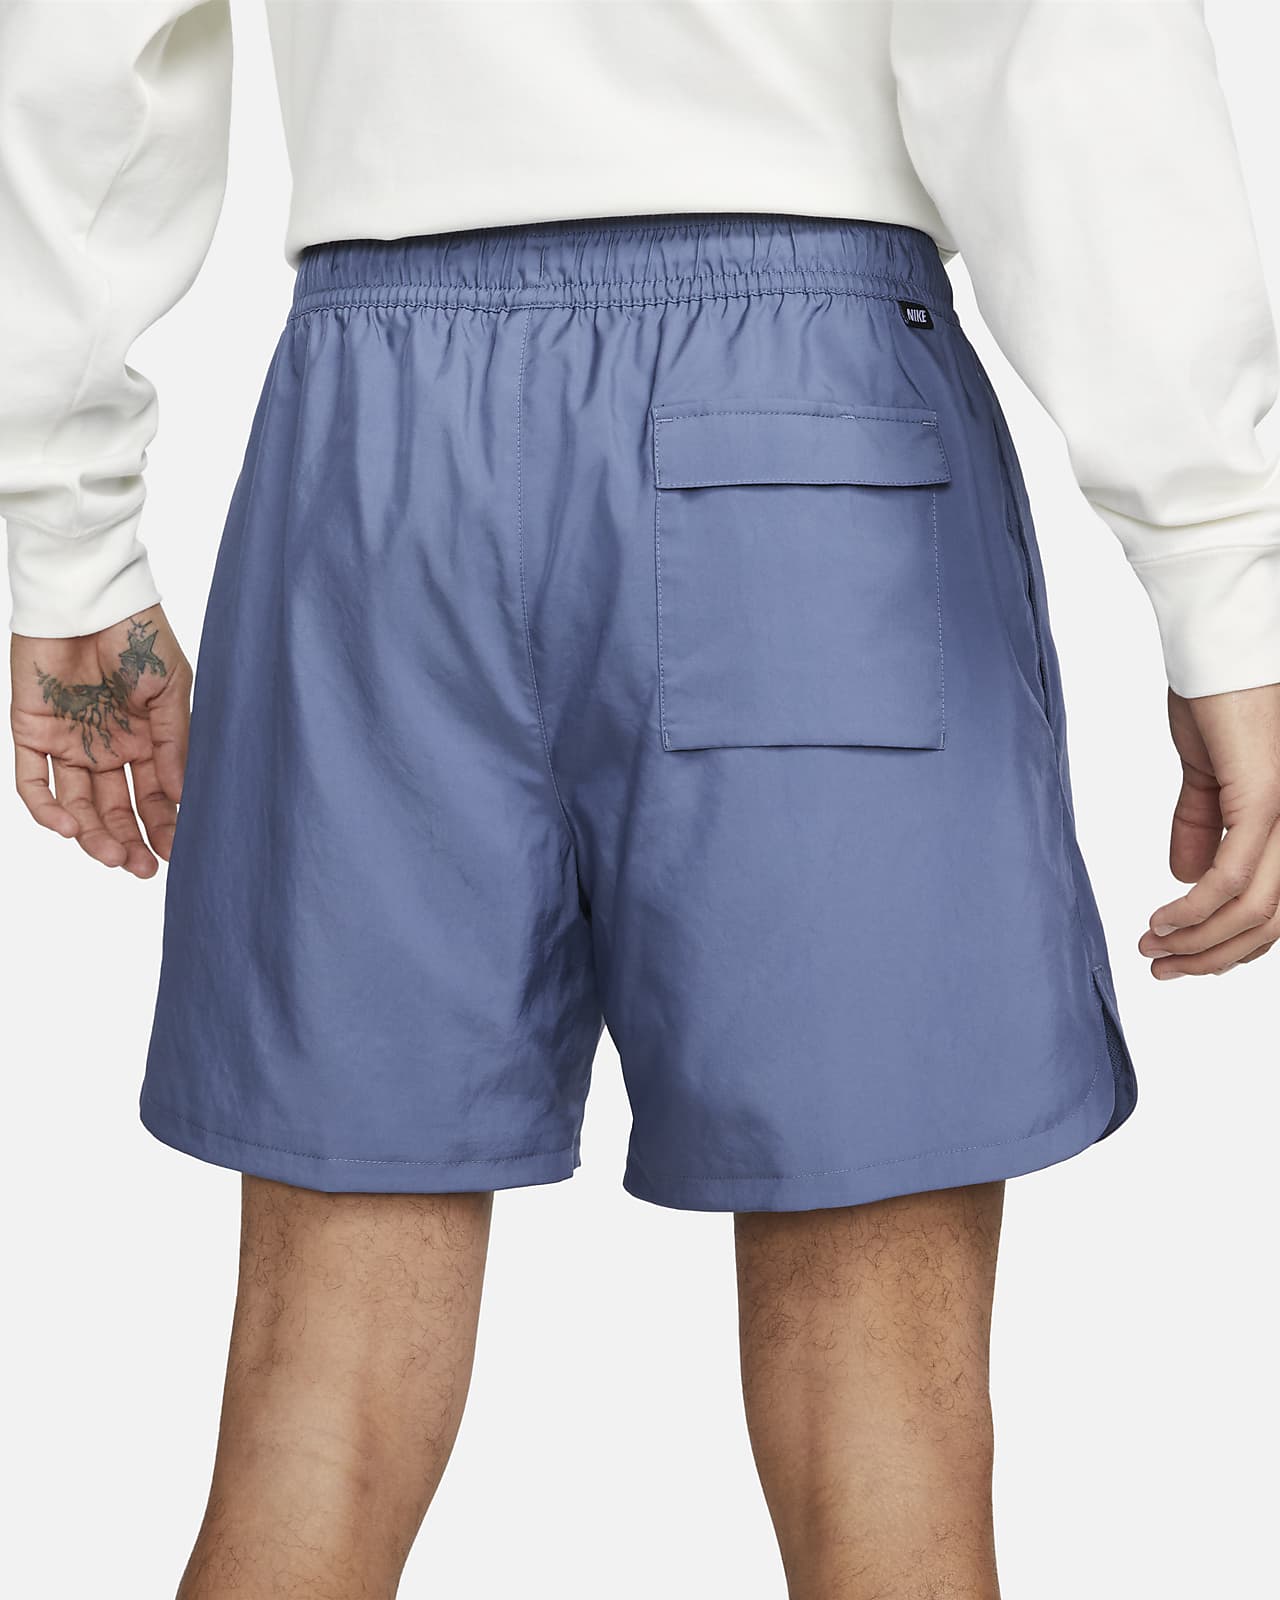 NIKE Sportswear Sport Essentials Woven Lined Flow Shorts, 51% OFF